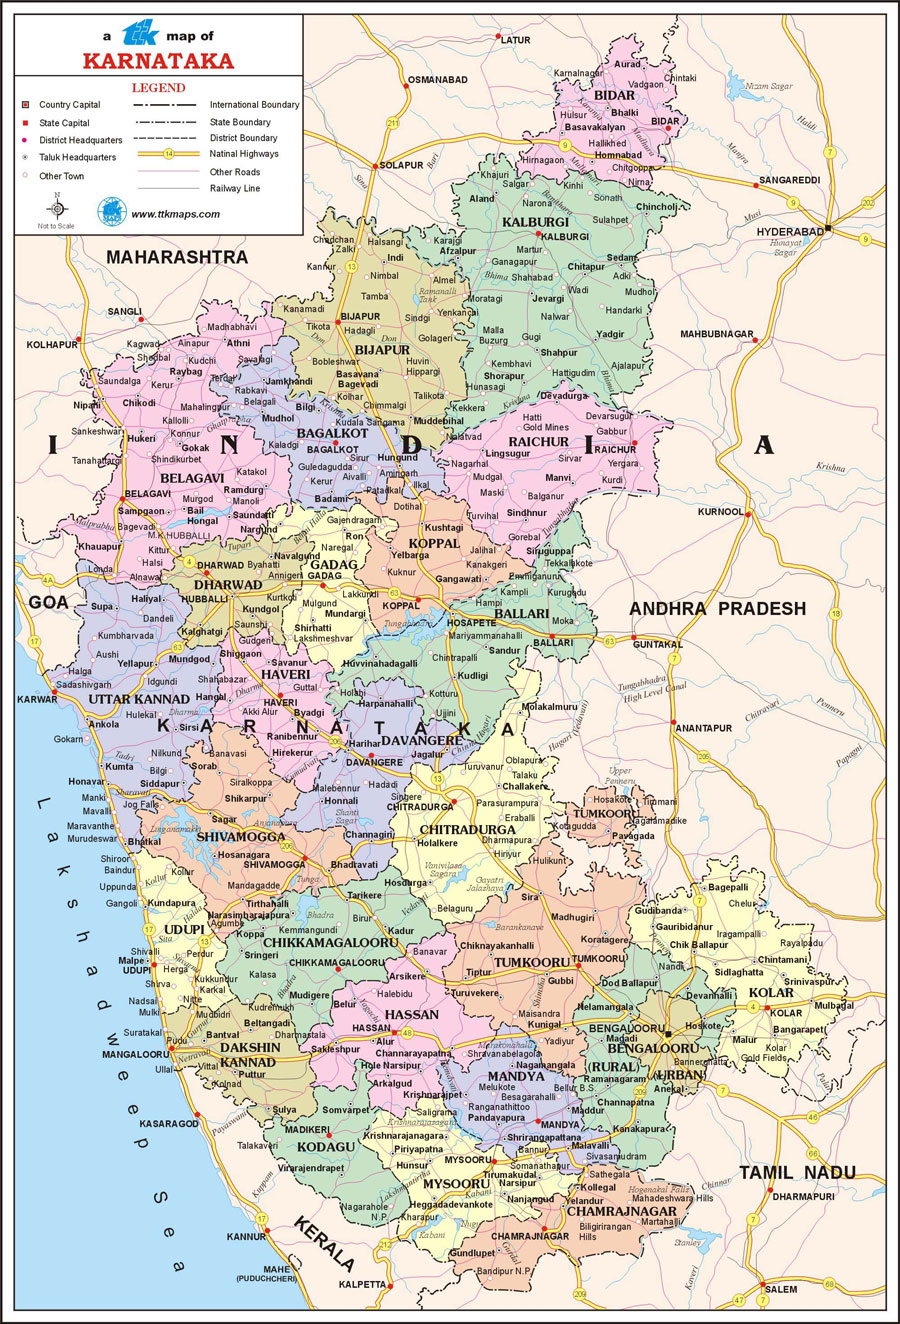 karnataka tourist places map with distance